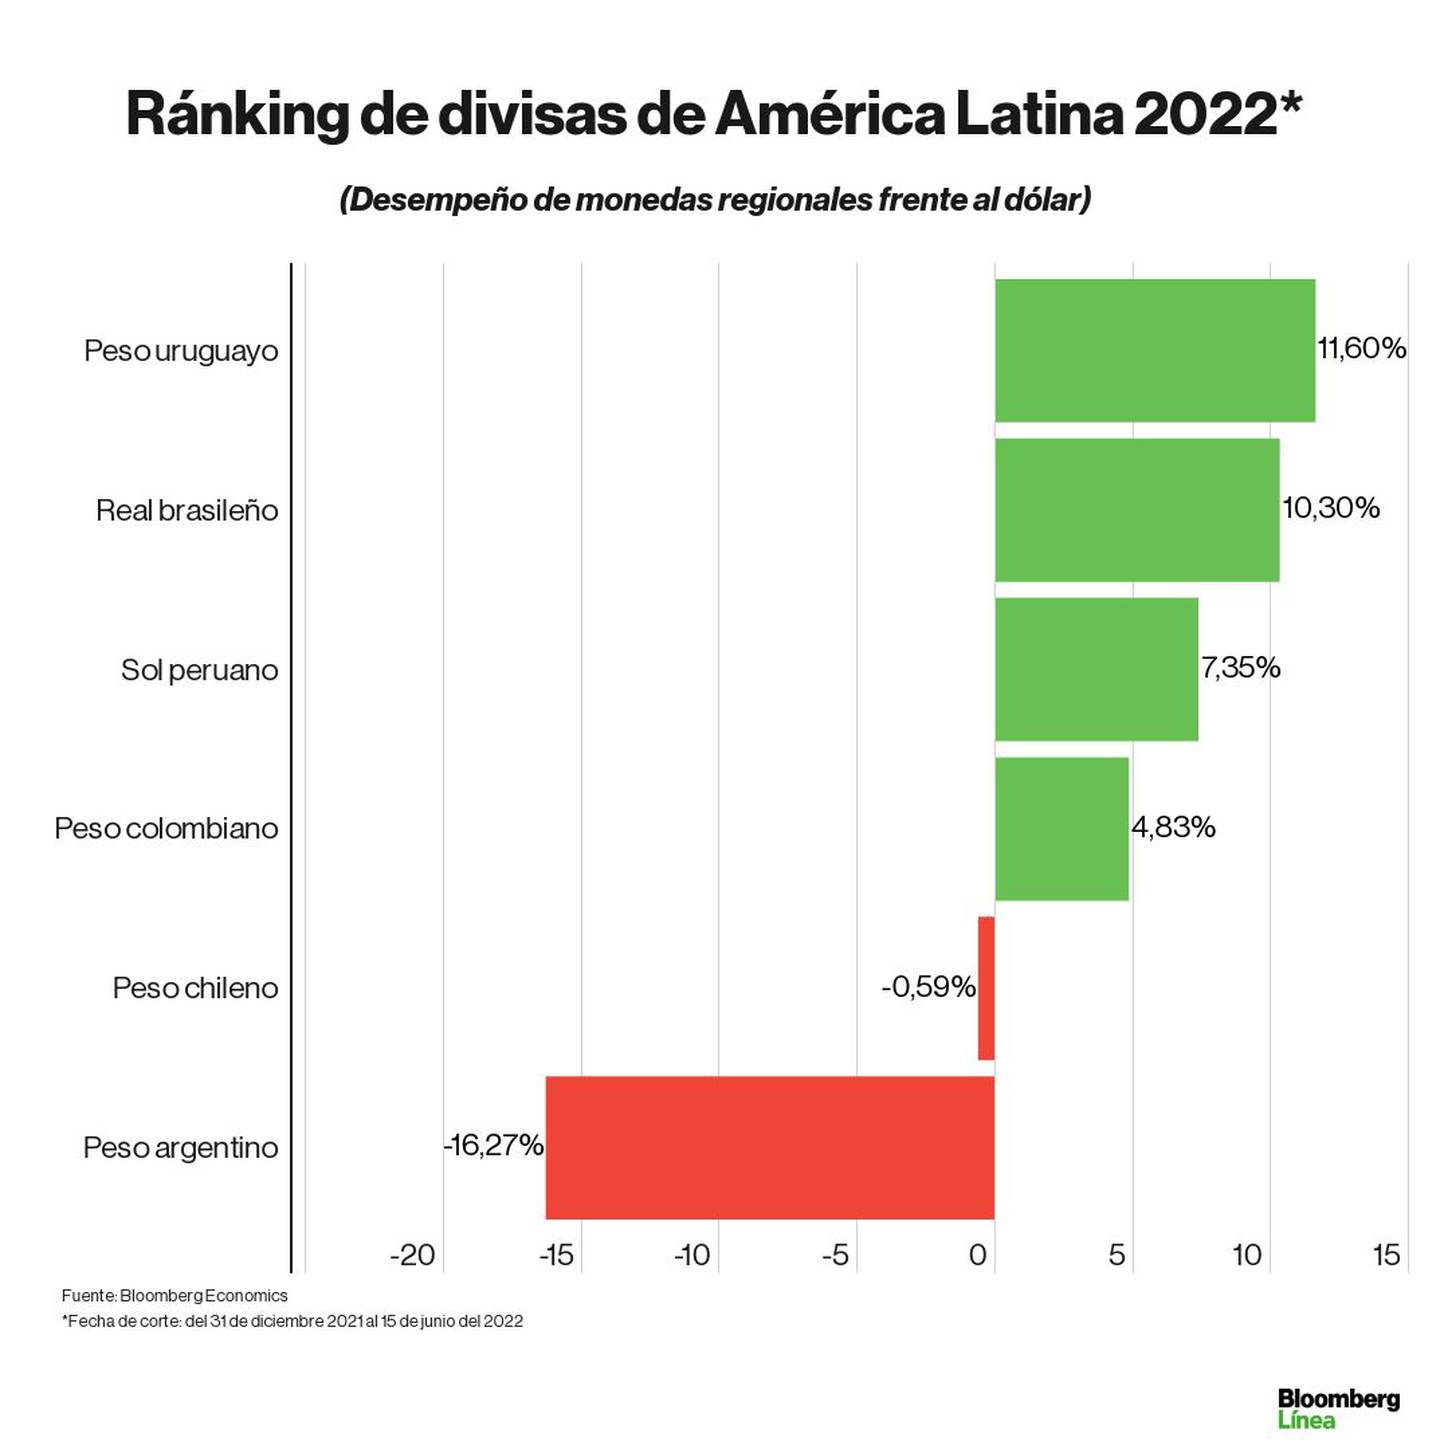 Ranking de divisas de América Latina en 2022 frente al dólardfd